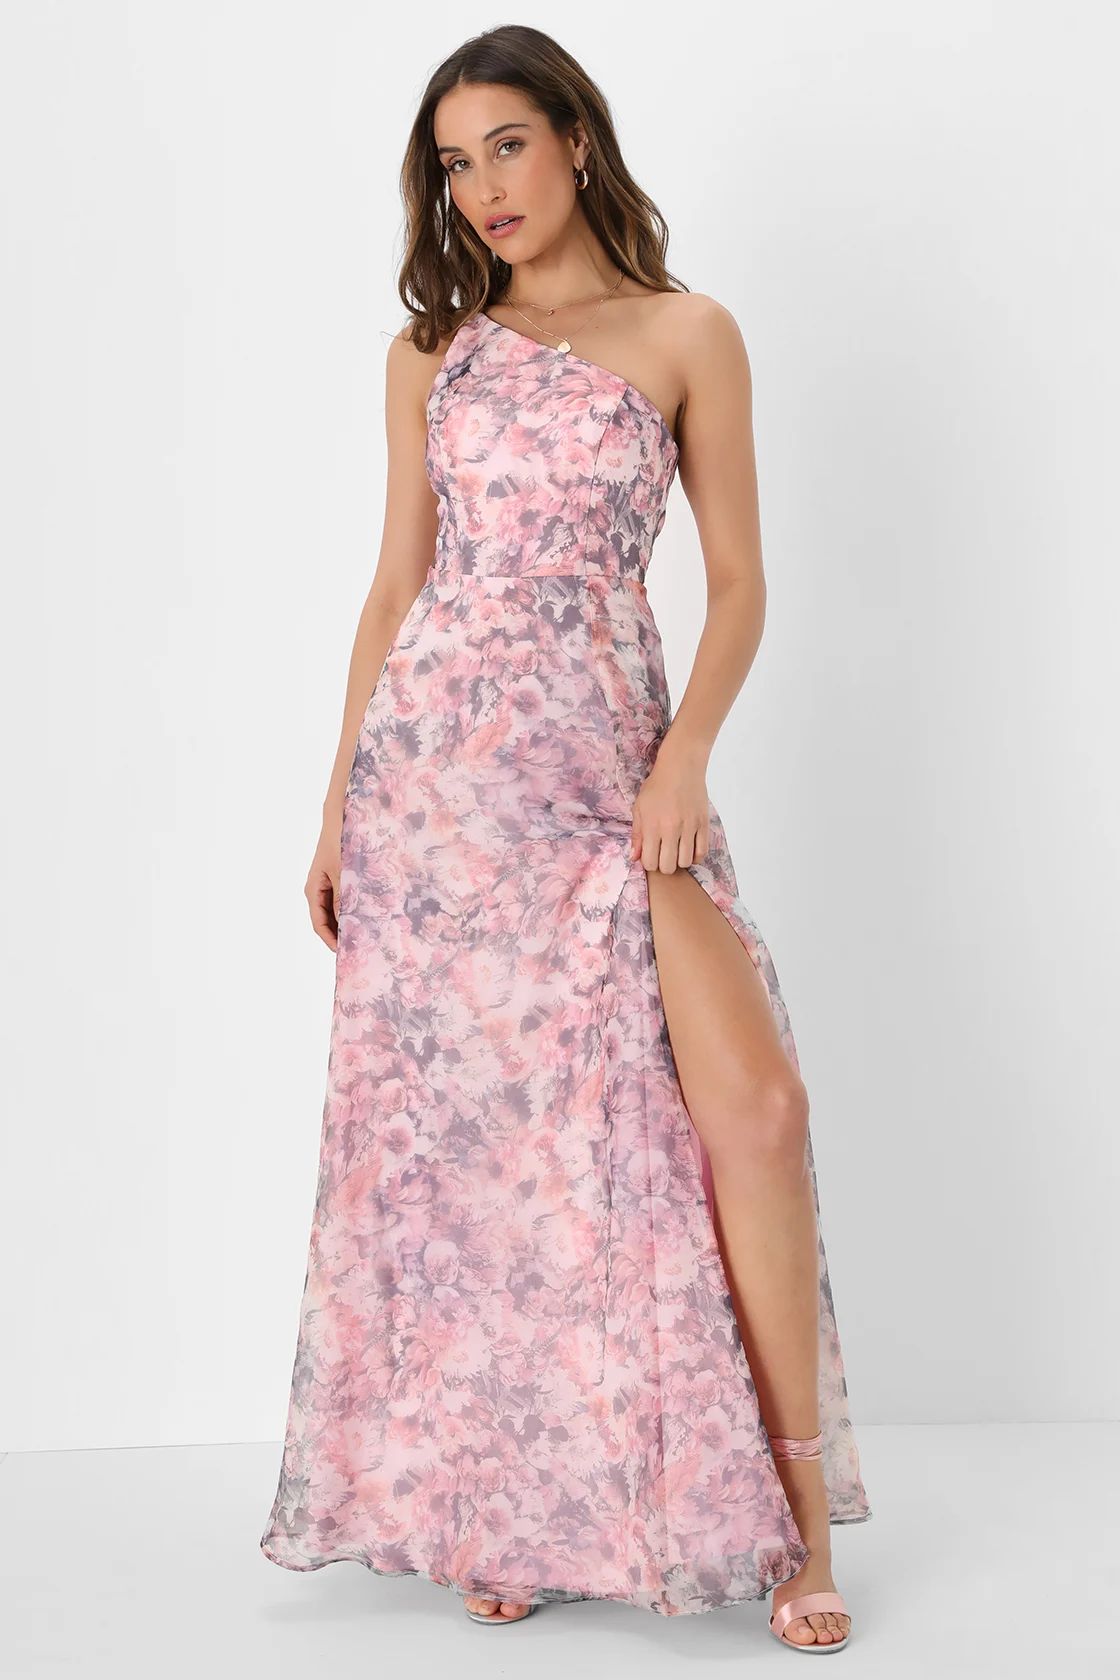 Exquisite Affair Pink Floral Organza One-Shoulder Maxi Dress | Lulus (US)